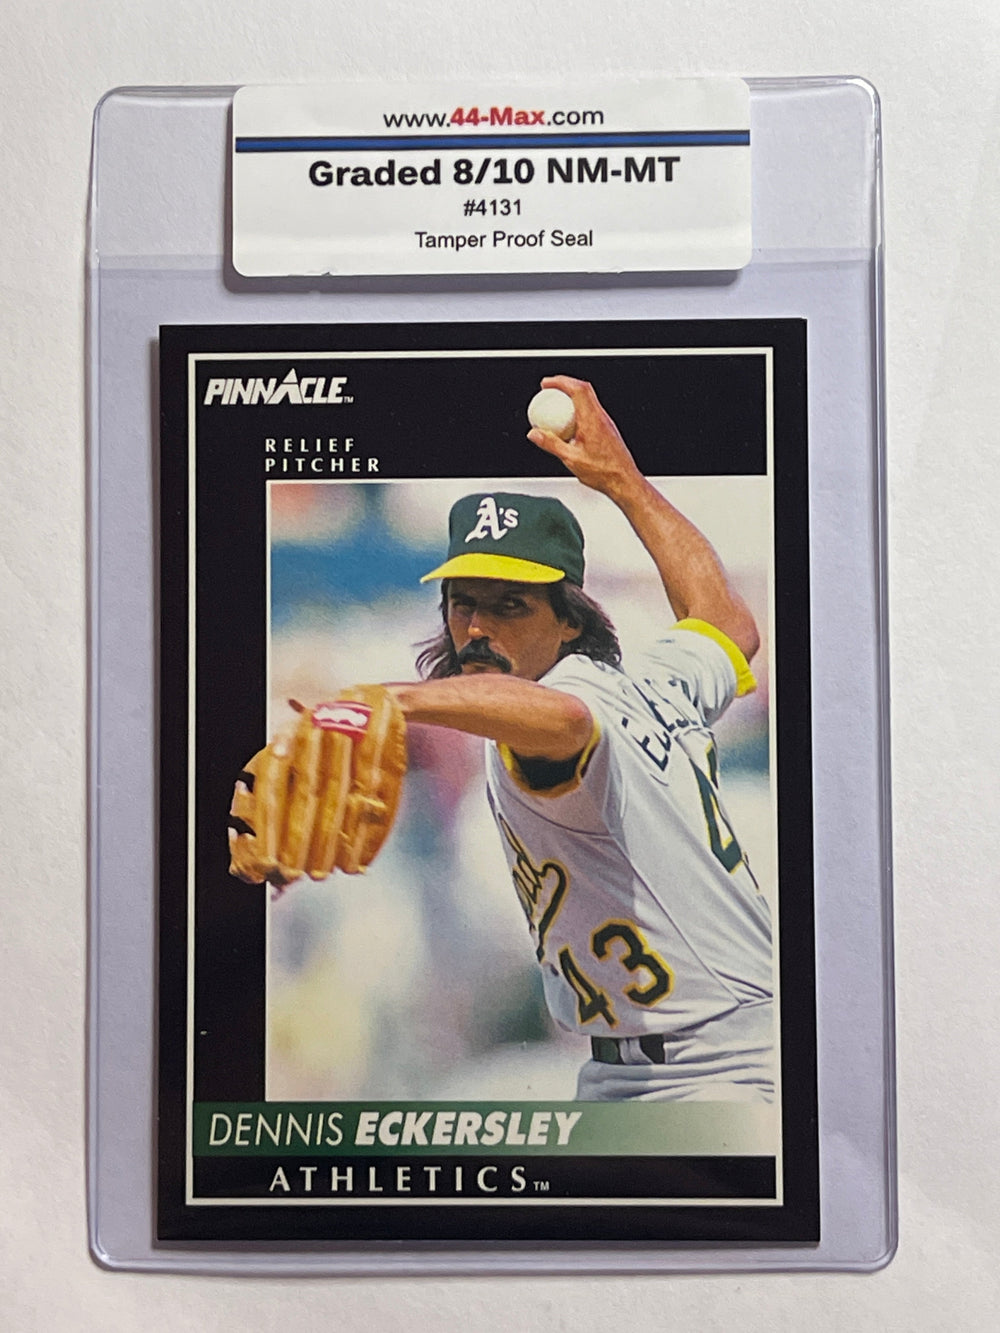 Dennis Eckersley 1992 Pinnacle Baseball Card. 44-Max 8/10 Mint #4131